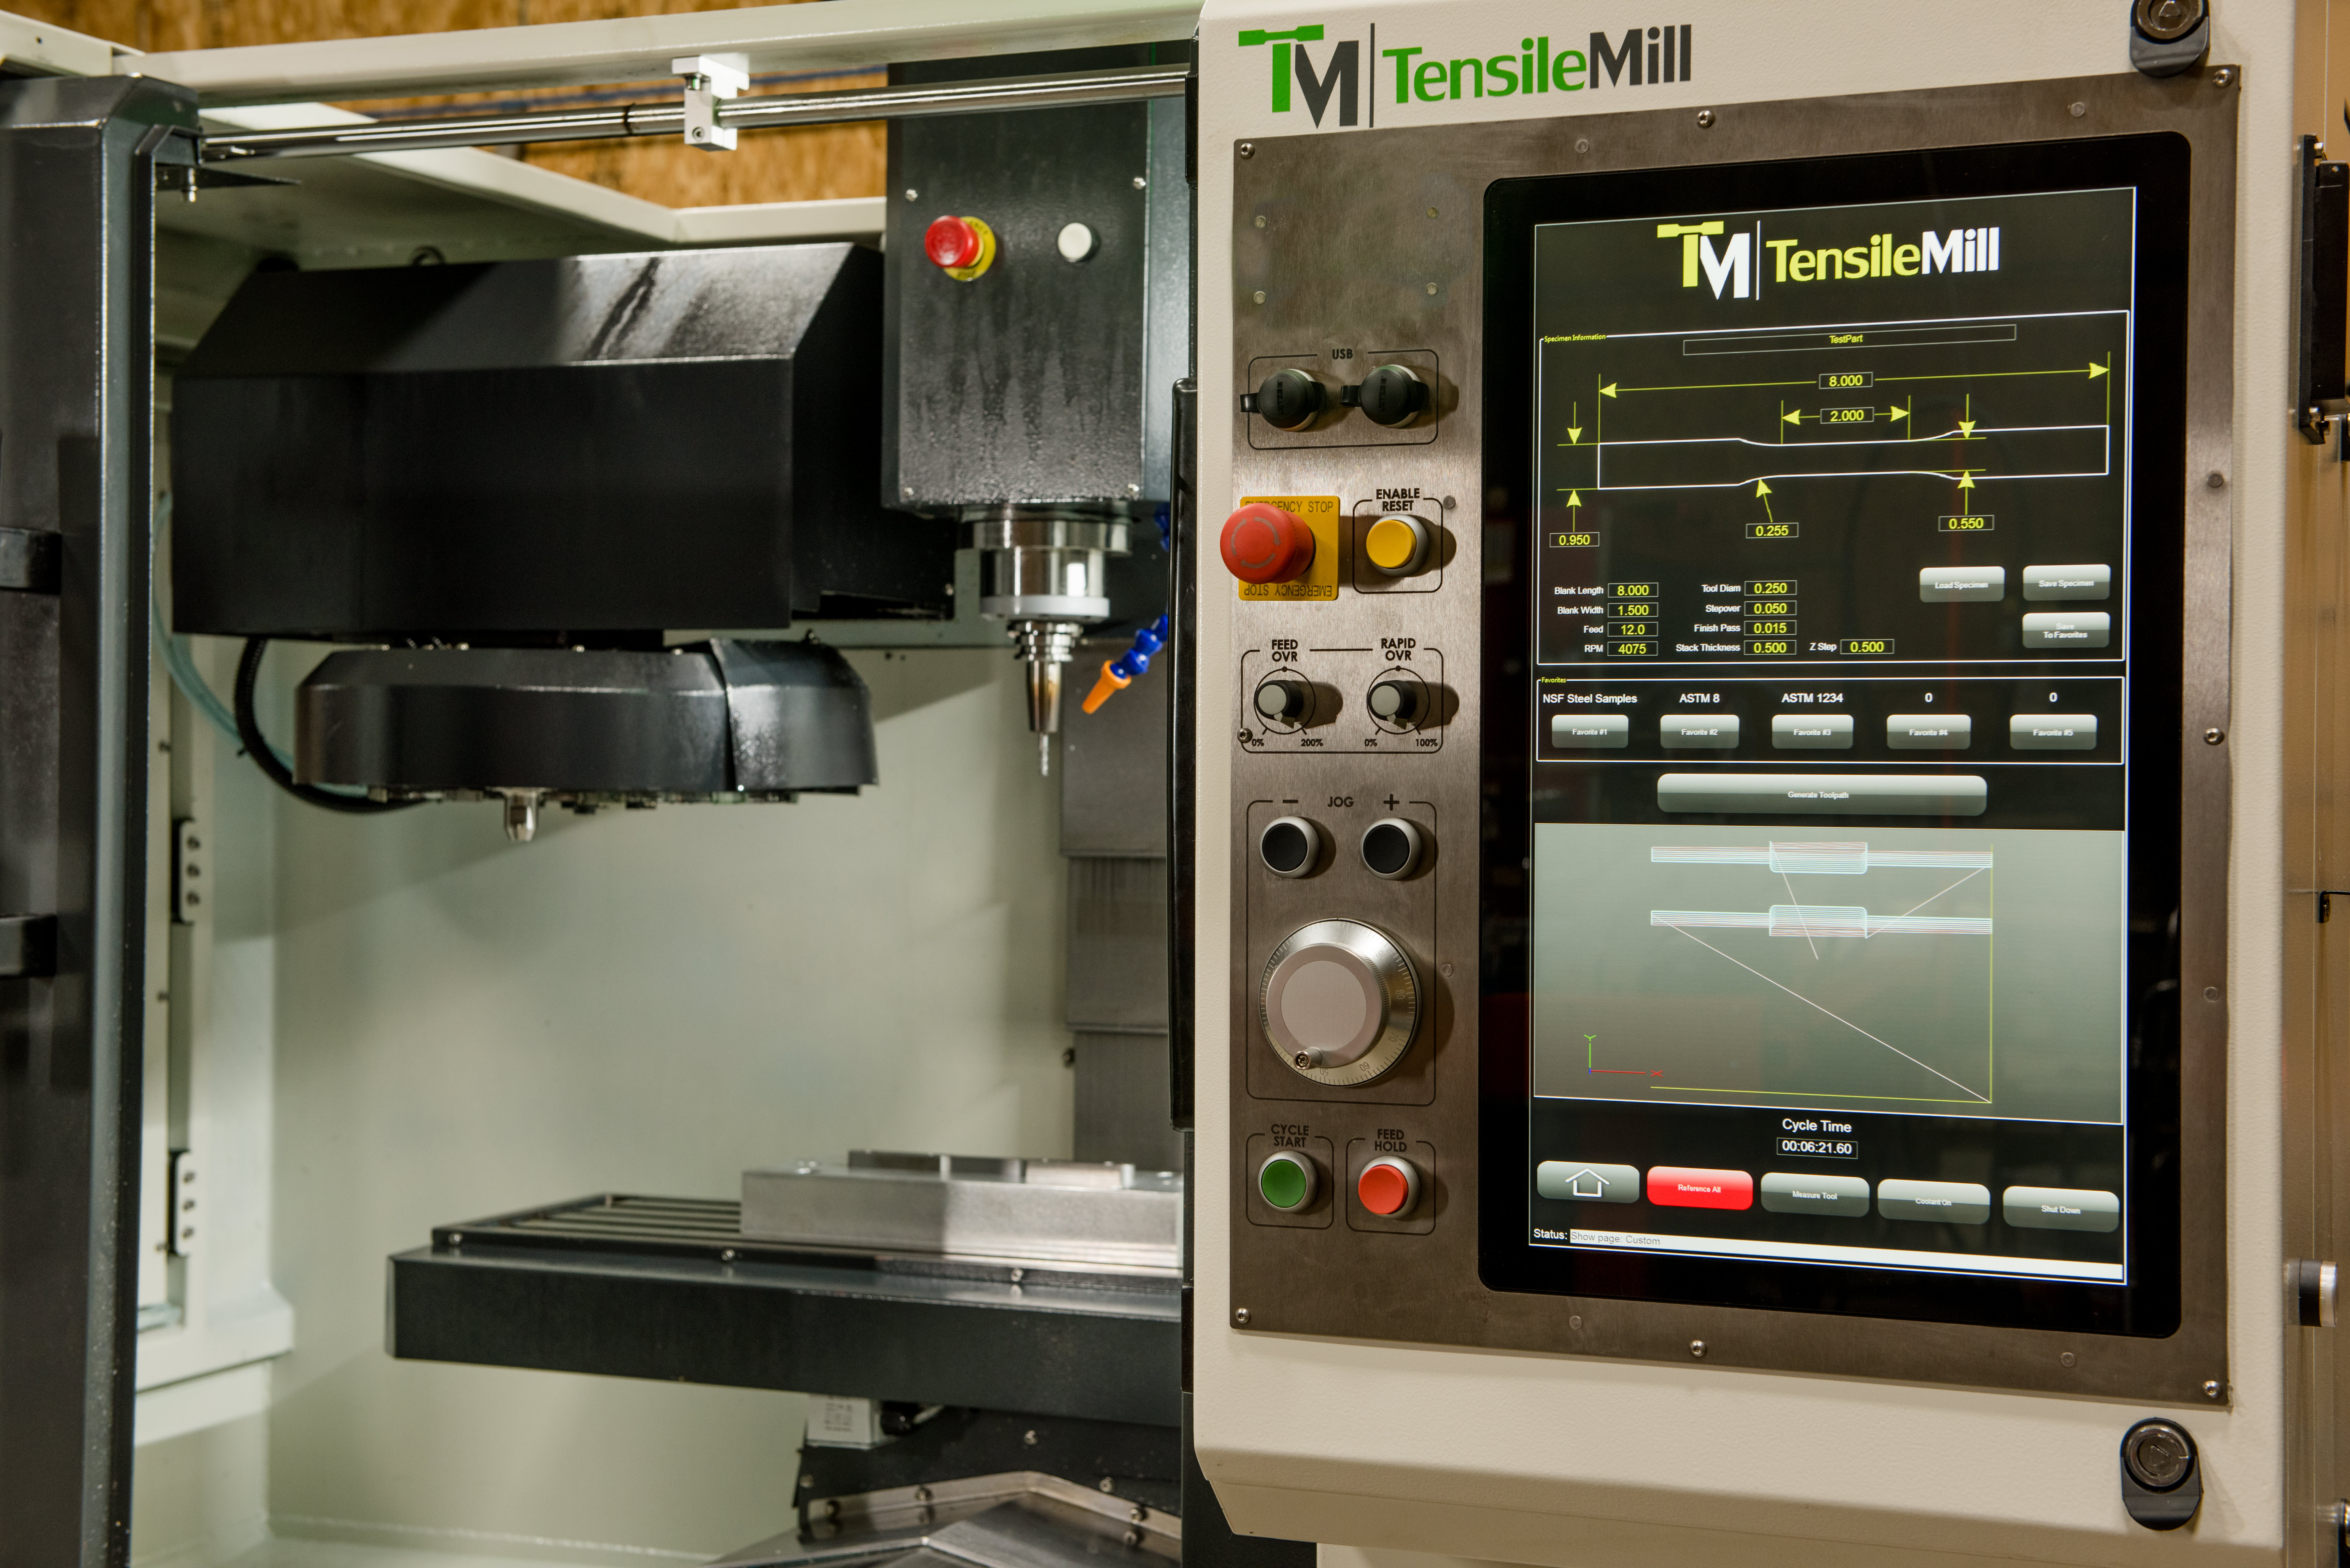 TensileMill CNC XL – Robust Flat Tensile Sample Preparation Machine